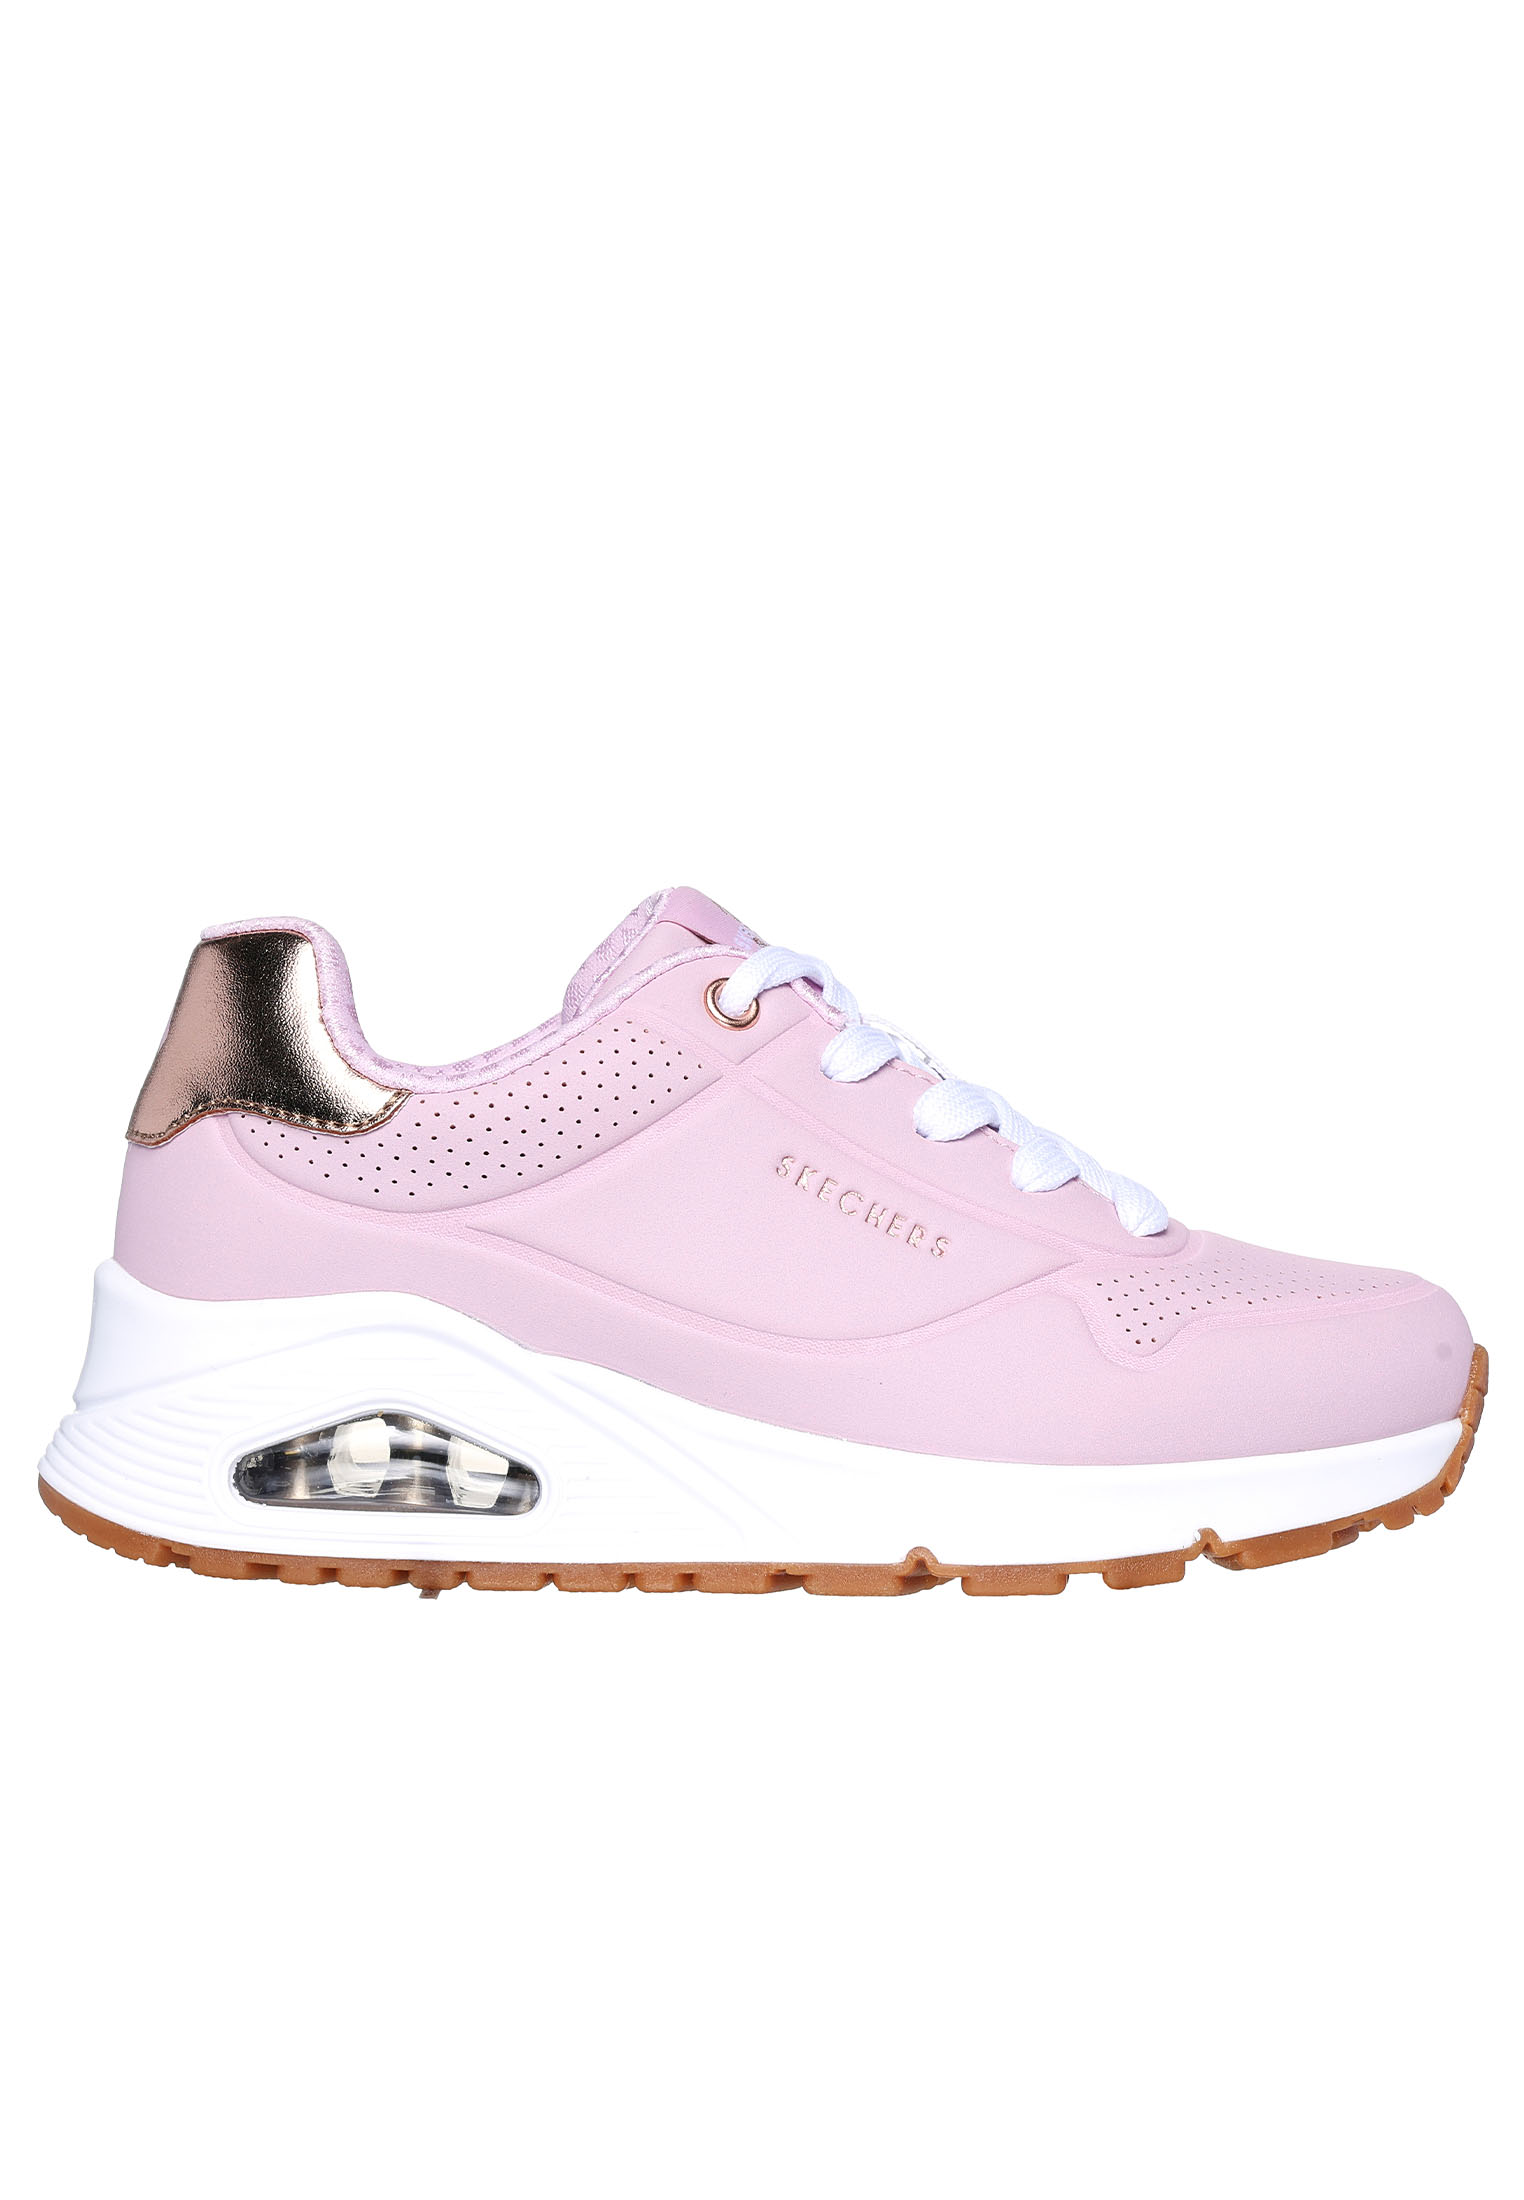 Skechers Uno Gen1 - Shimmer Away Meisjes Sneakers - Roze - Maat 28